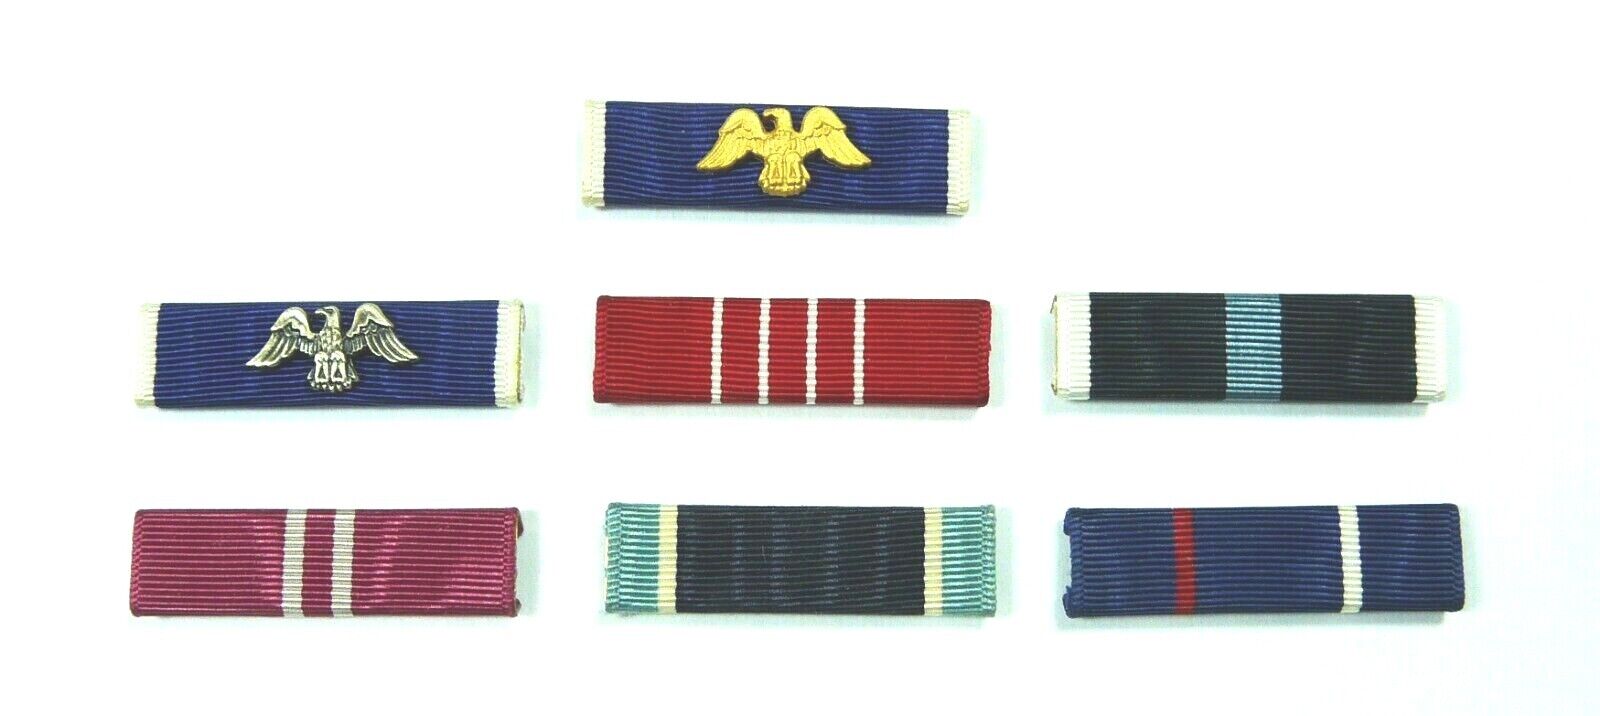 RARE US Presidential Civilian Medal service ribbons, set of 7